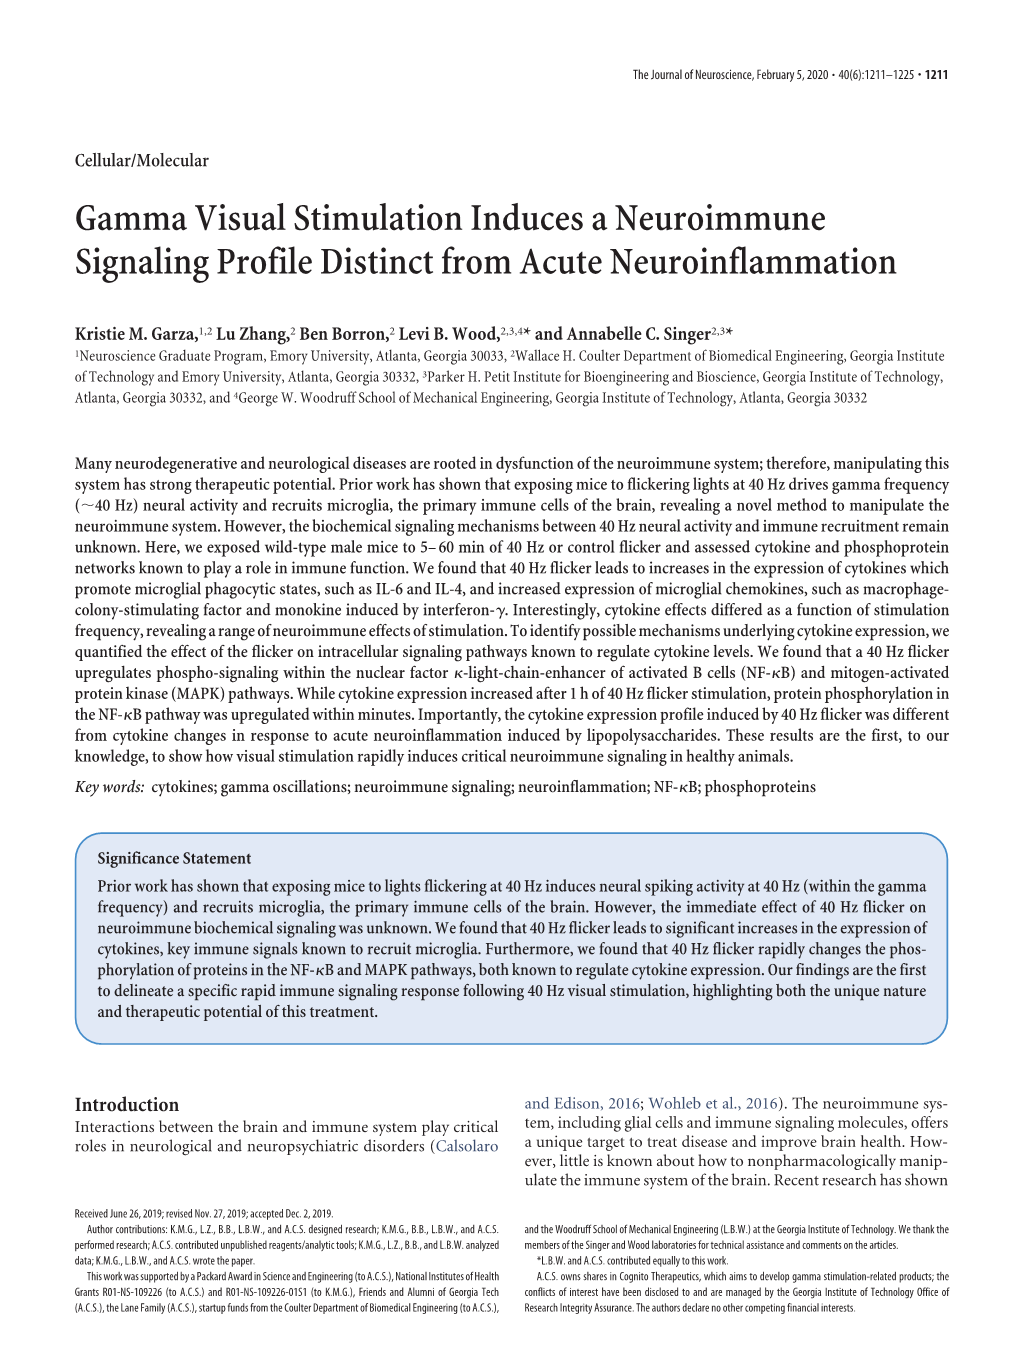 Gamma Visual Stimulation Induces a Neuroimmune Signaling Profile Distinct from Acute Neuroinflammation